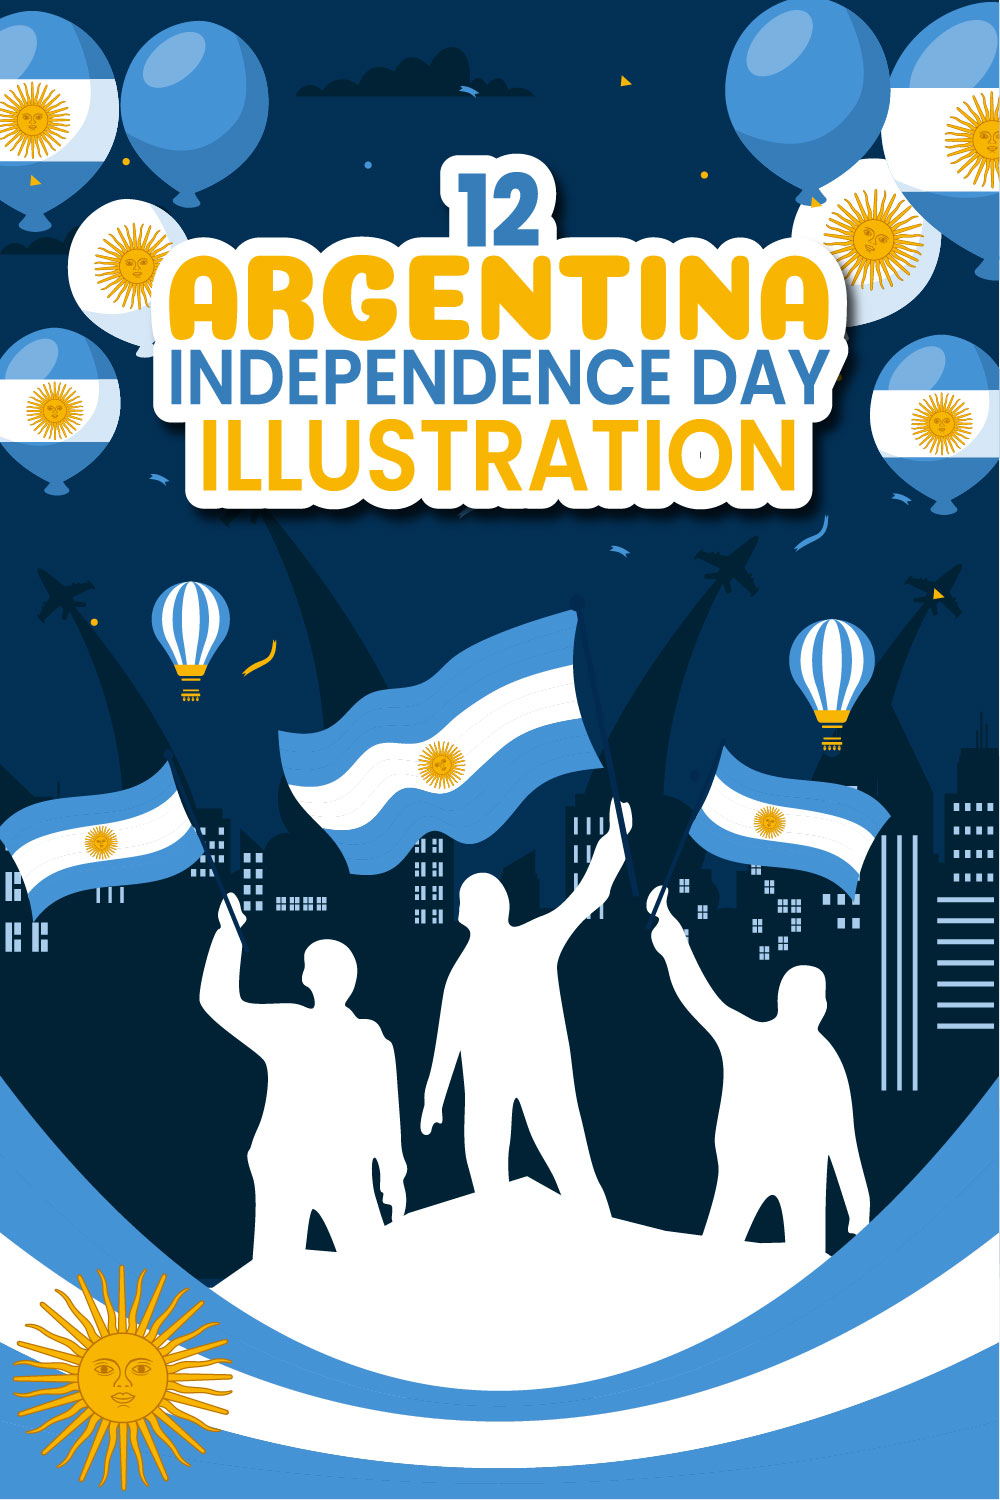 12 Argentina Independence Day Illustration pinterest preview image.